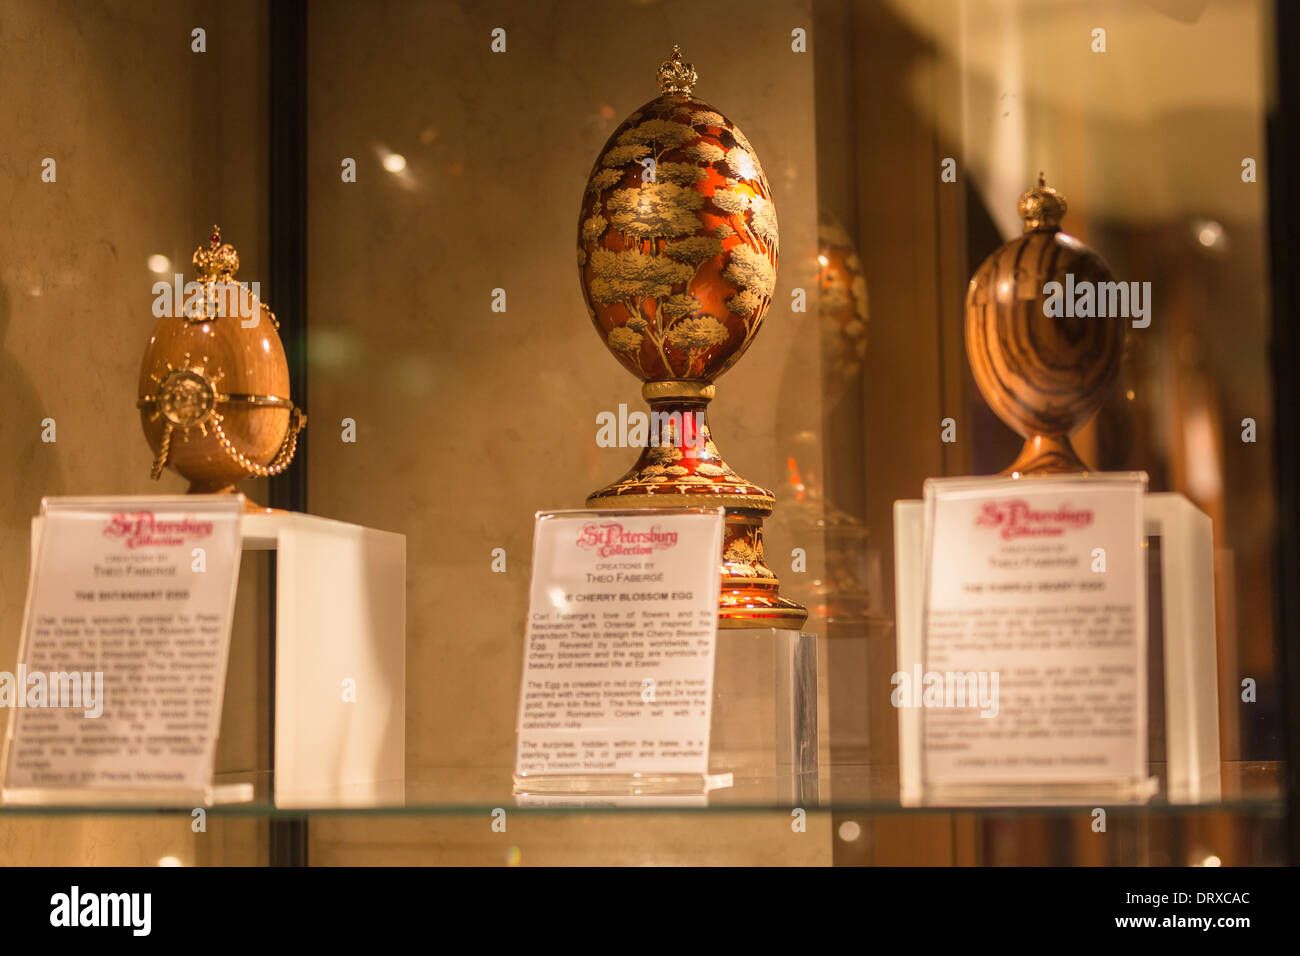 'Cherry Blossom' uovo. Uovo di Faberge sul display. Foto Stock